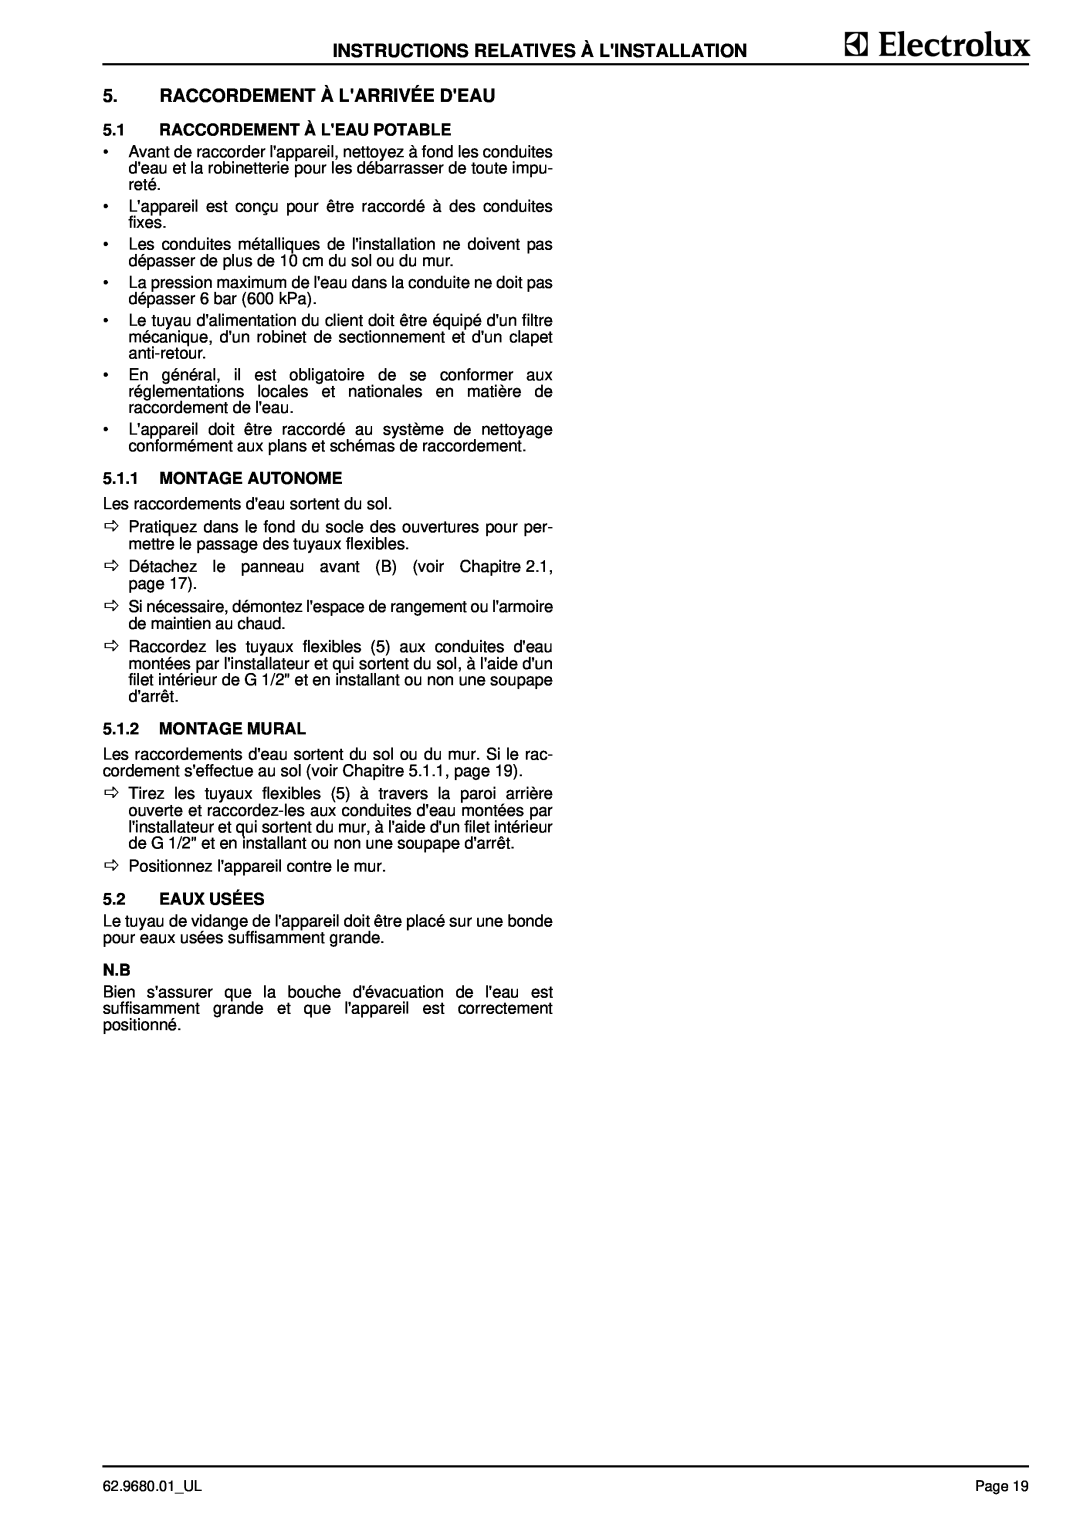 Electrolux WKGROAOOOO Instructions Relatives À Linstallation, Raccordement À Larrivée Deau, 5.1RACCORDEMENT À LEAU POTABLE 